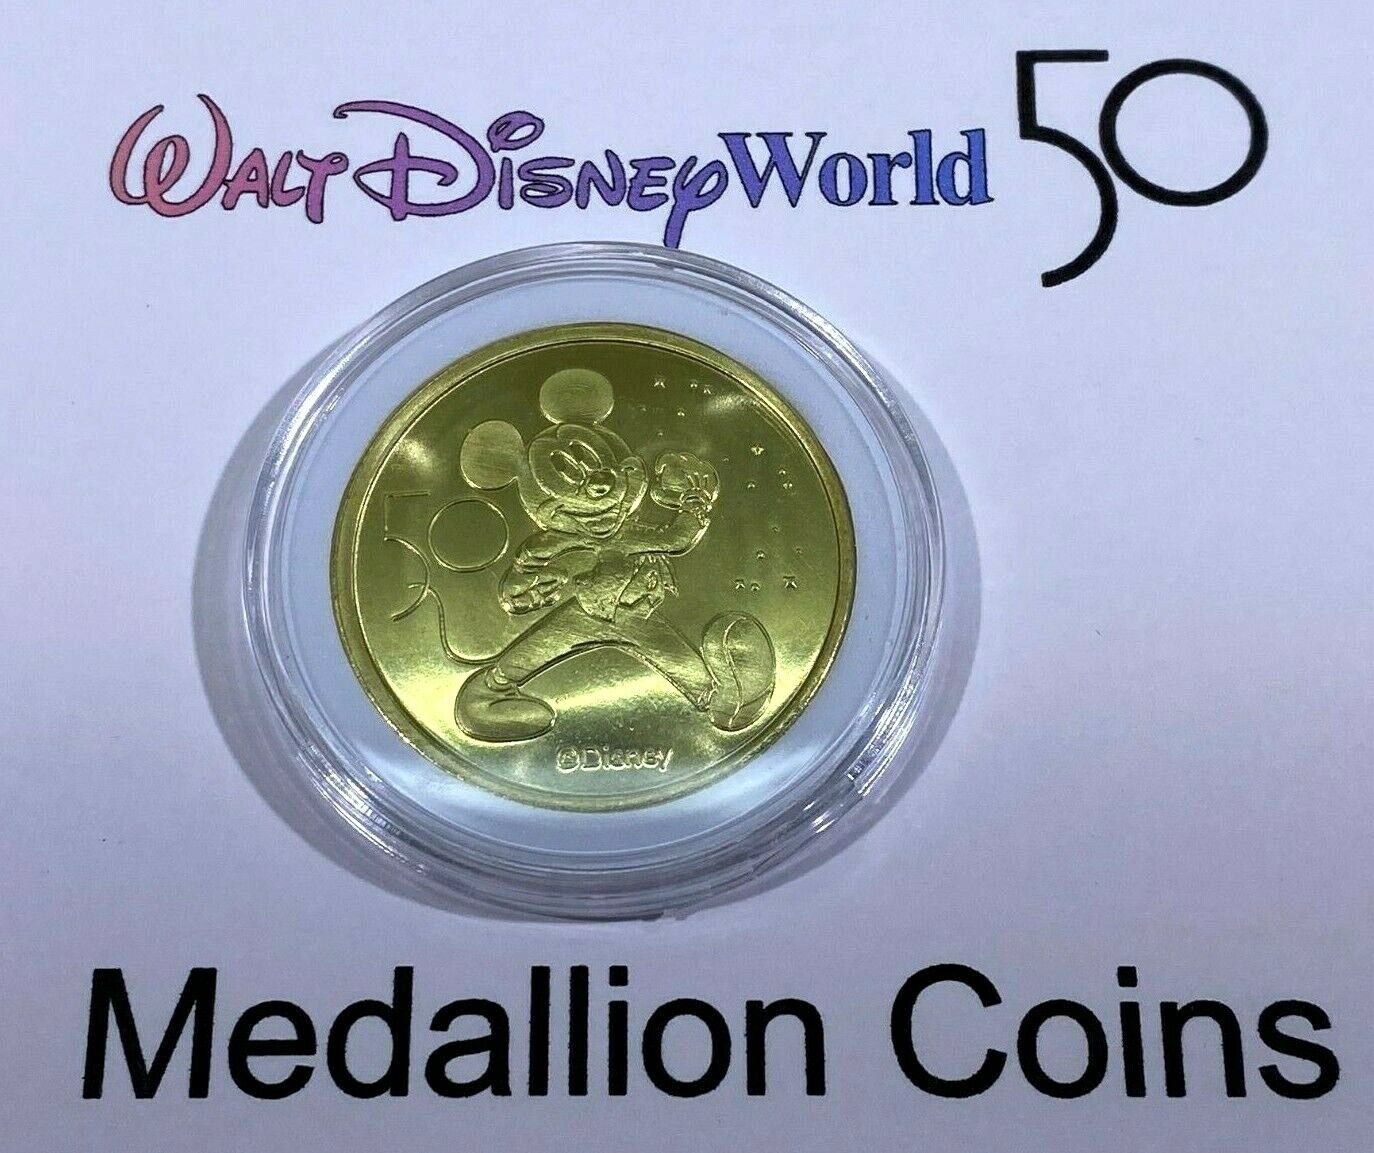 MIckey Mouse Disney World 50th Anniversary Commemorative Medallion Coin in Case